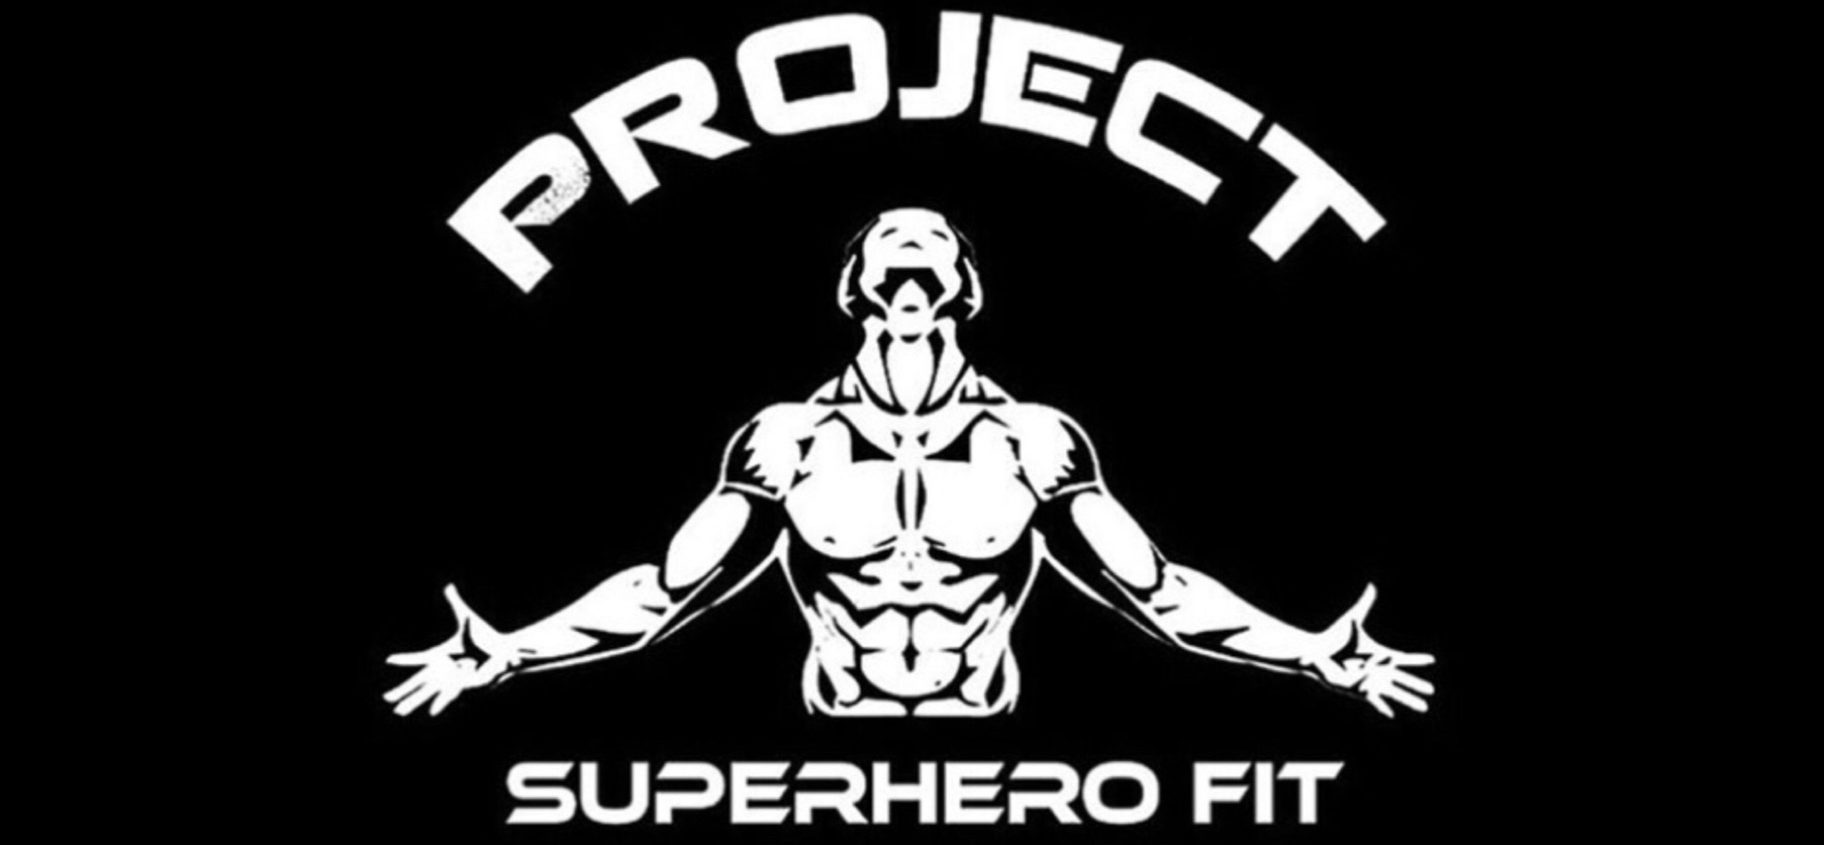 Project SuperHero Fit